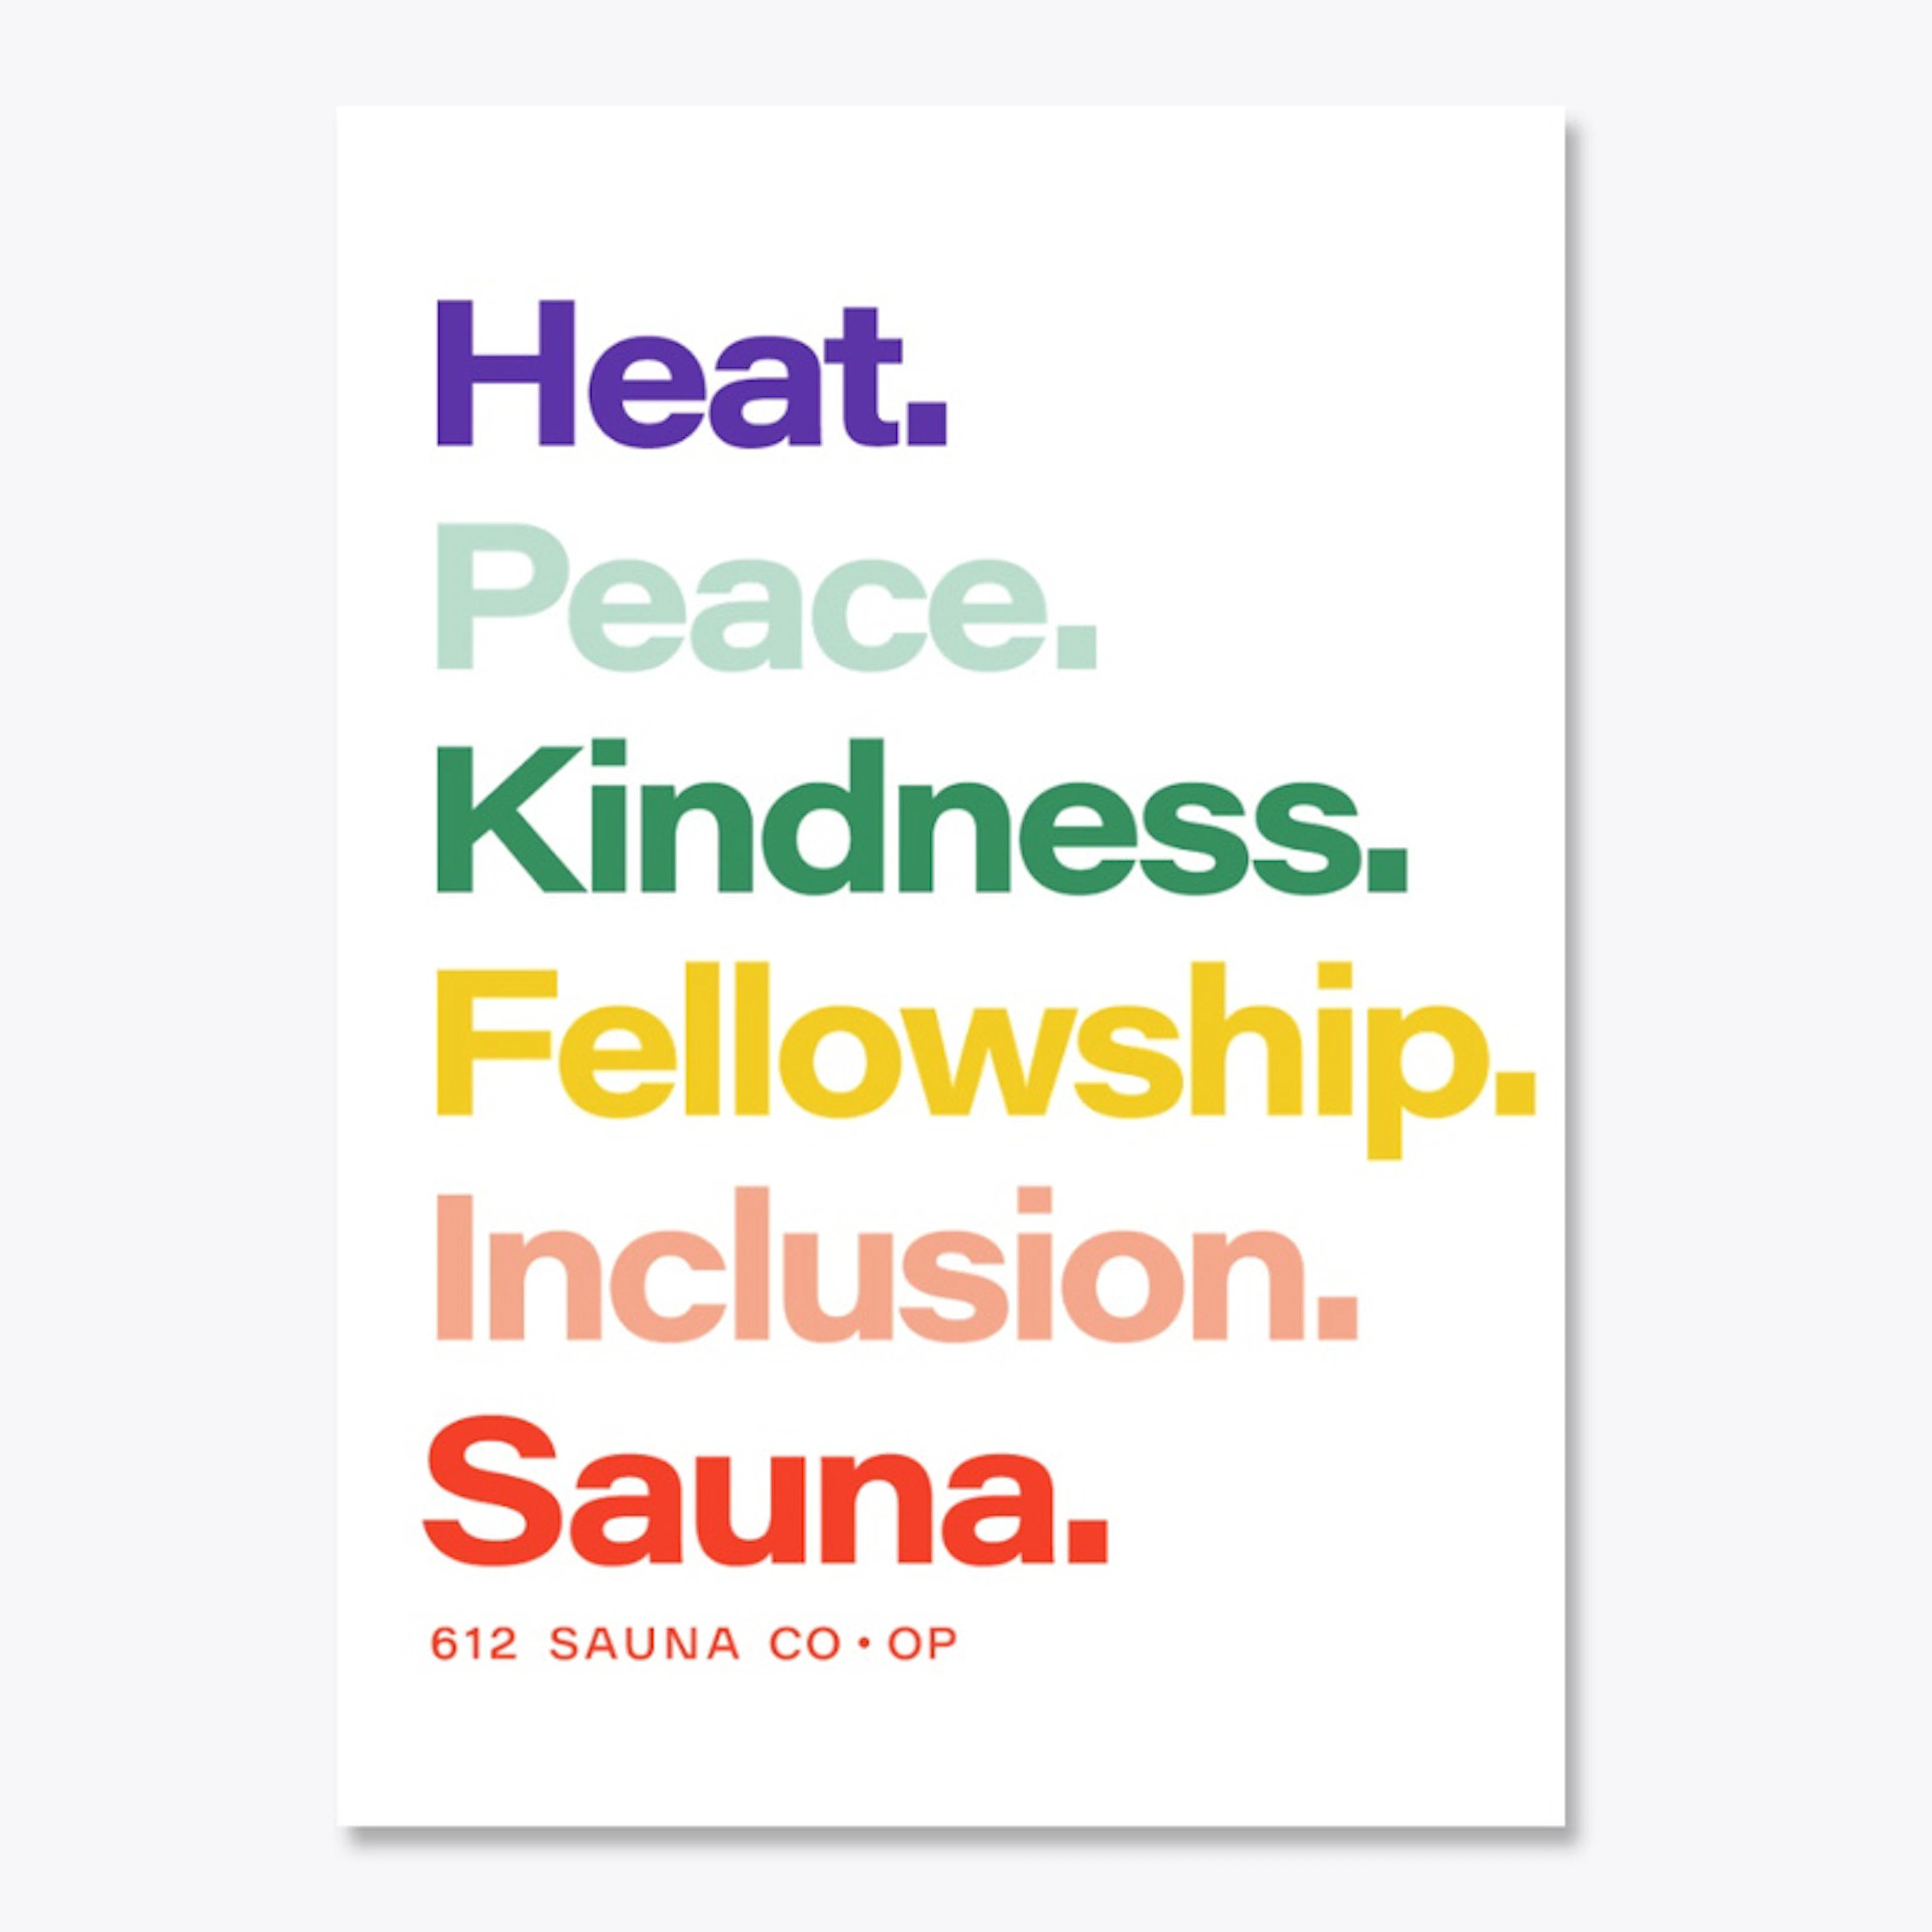 Heat Peace Kindness Sauna